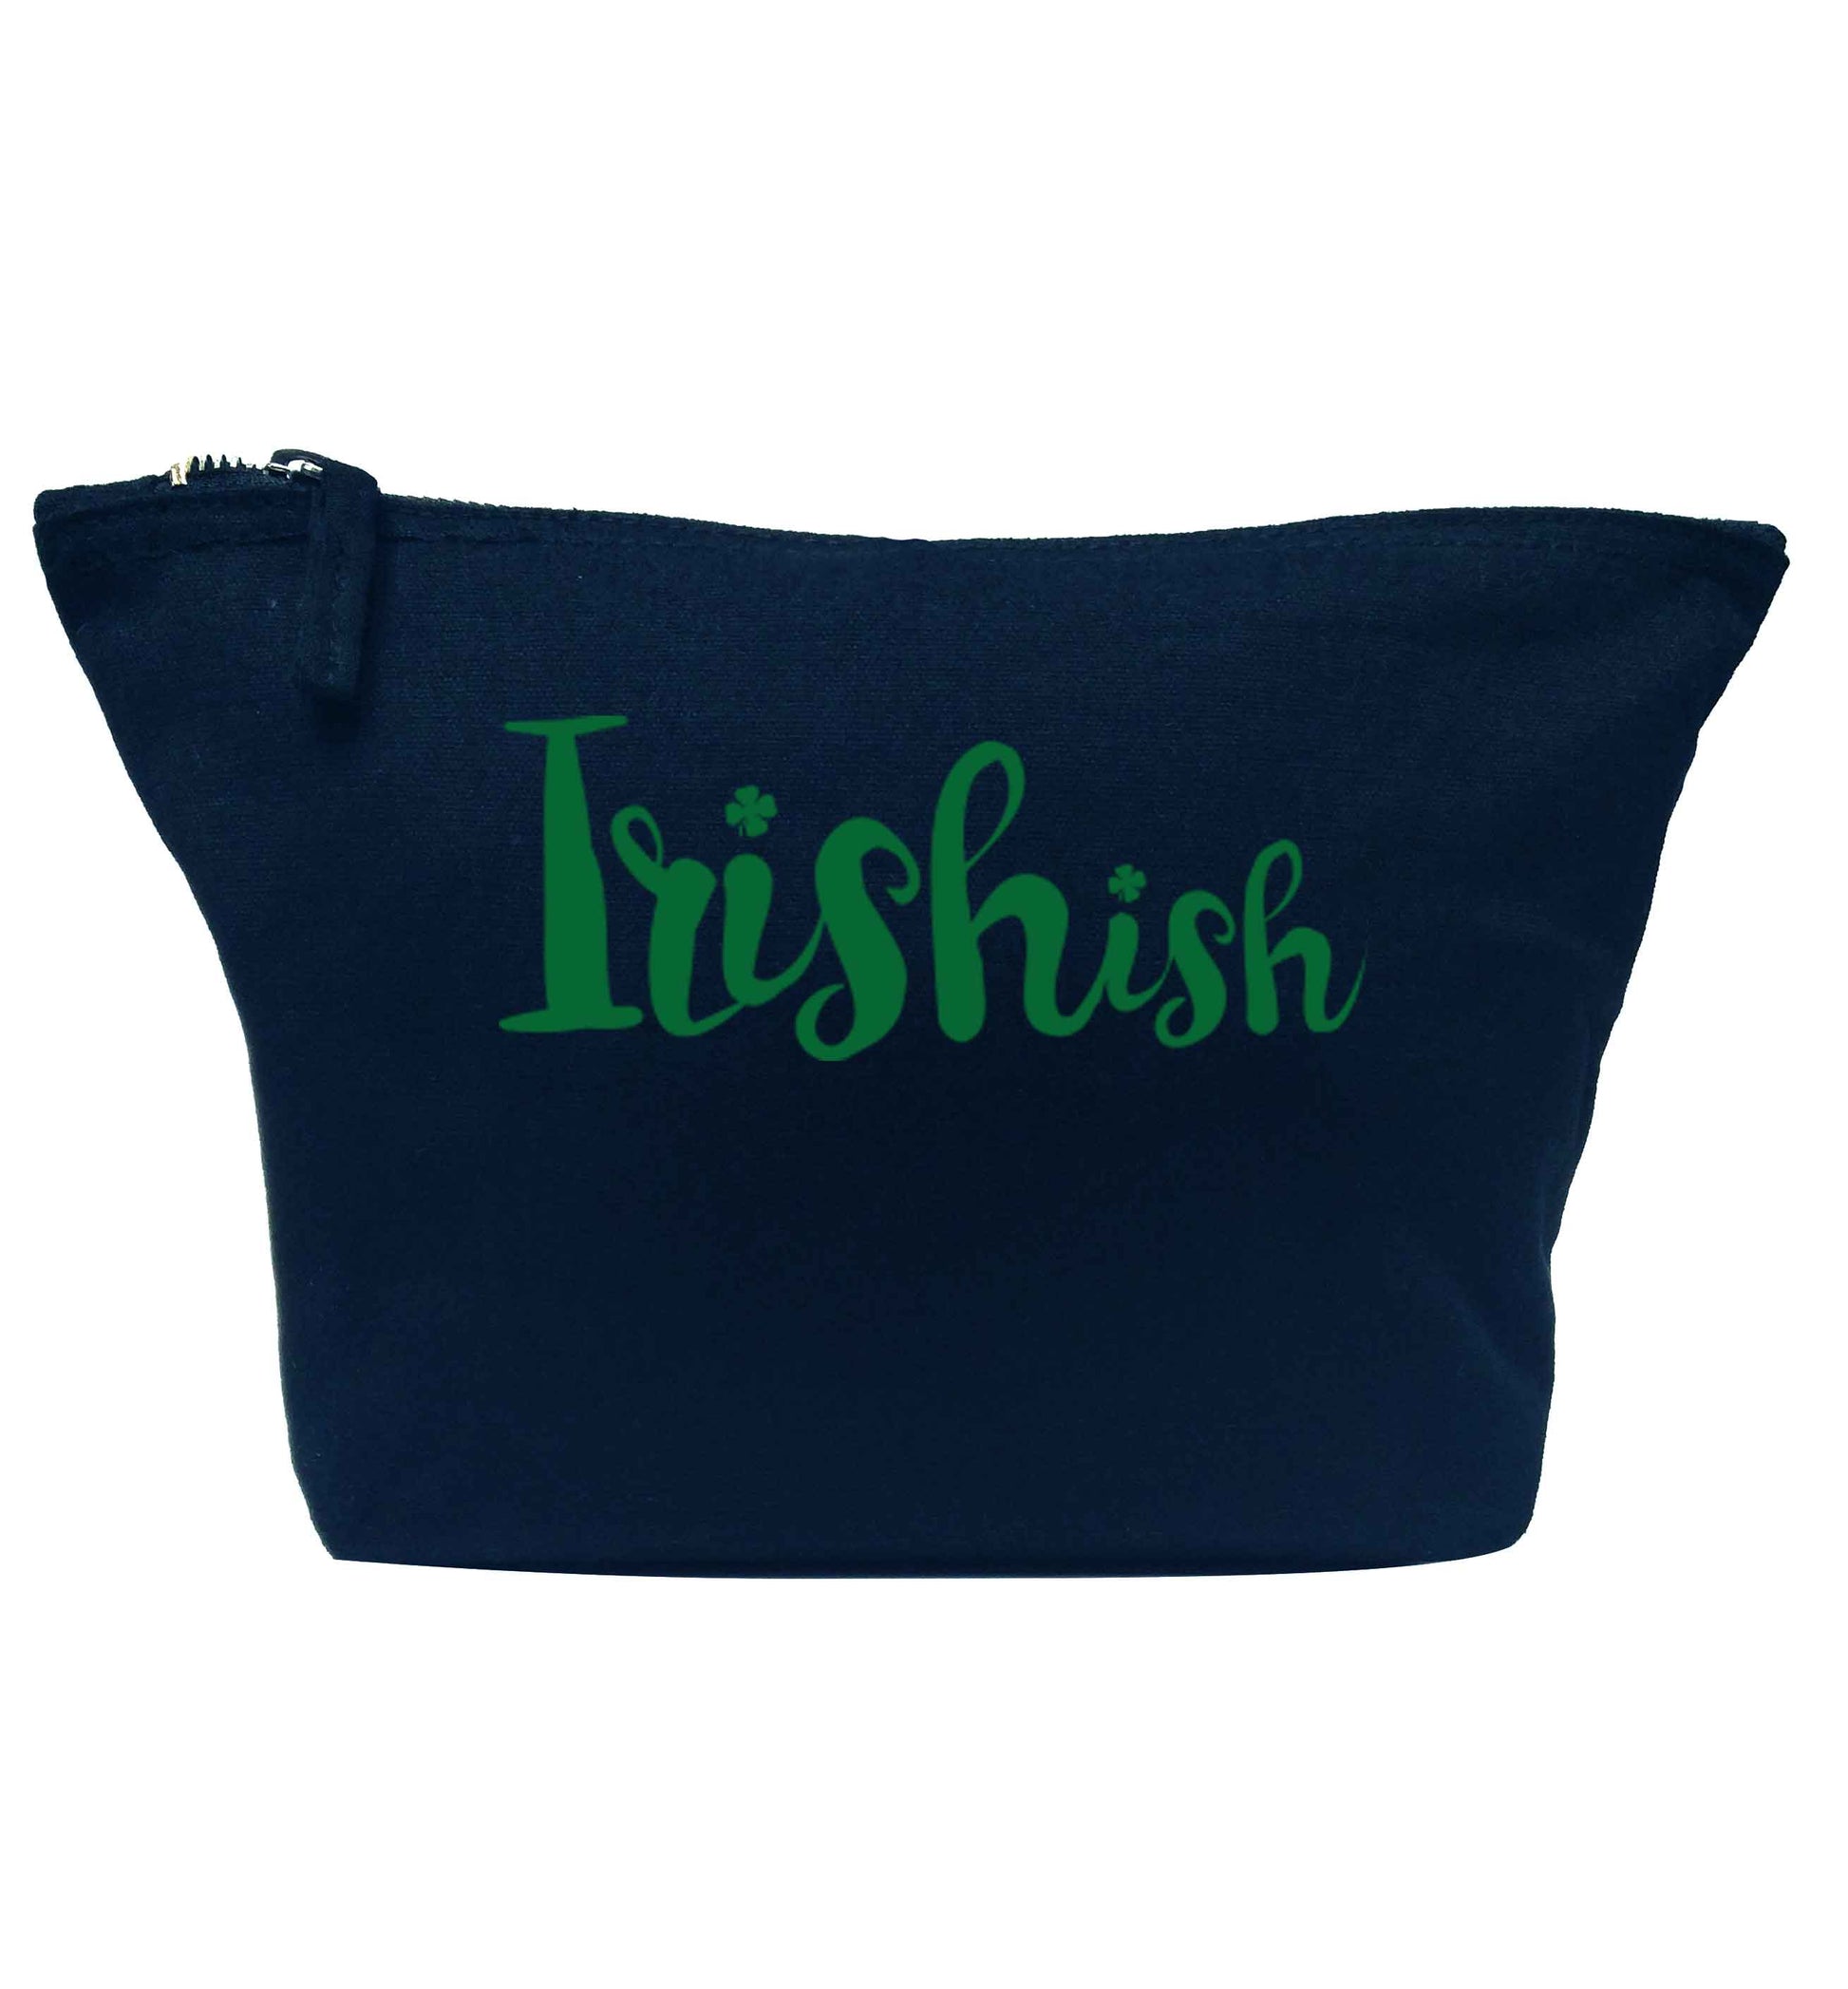 Irishish navy makeup bag